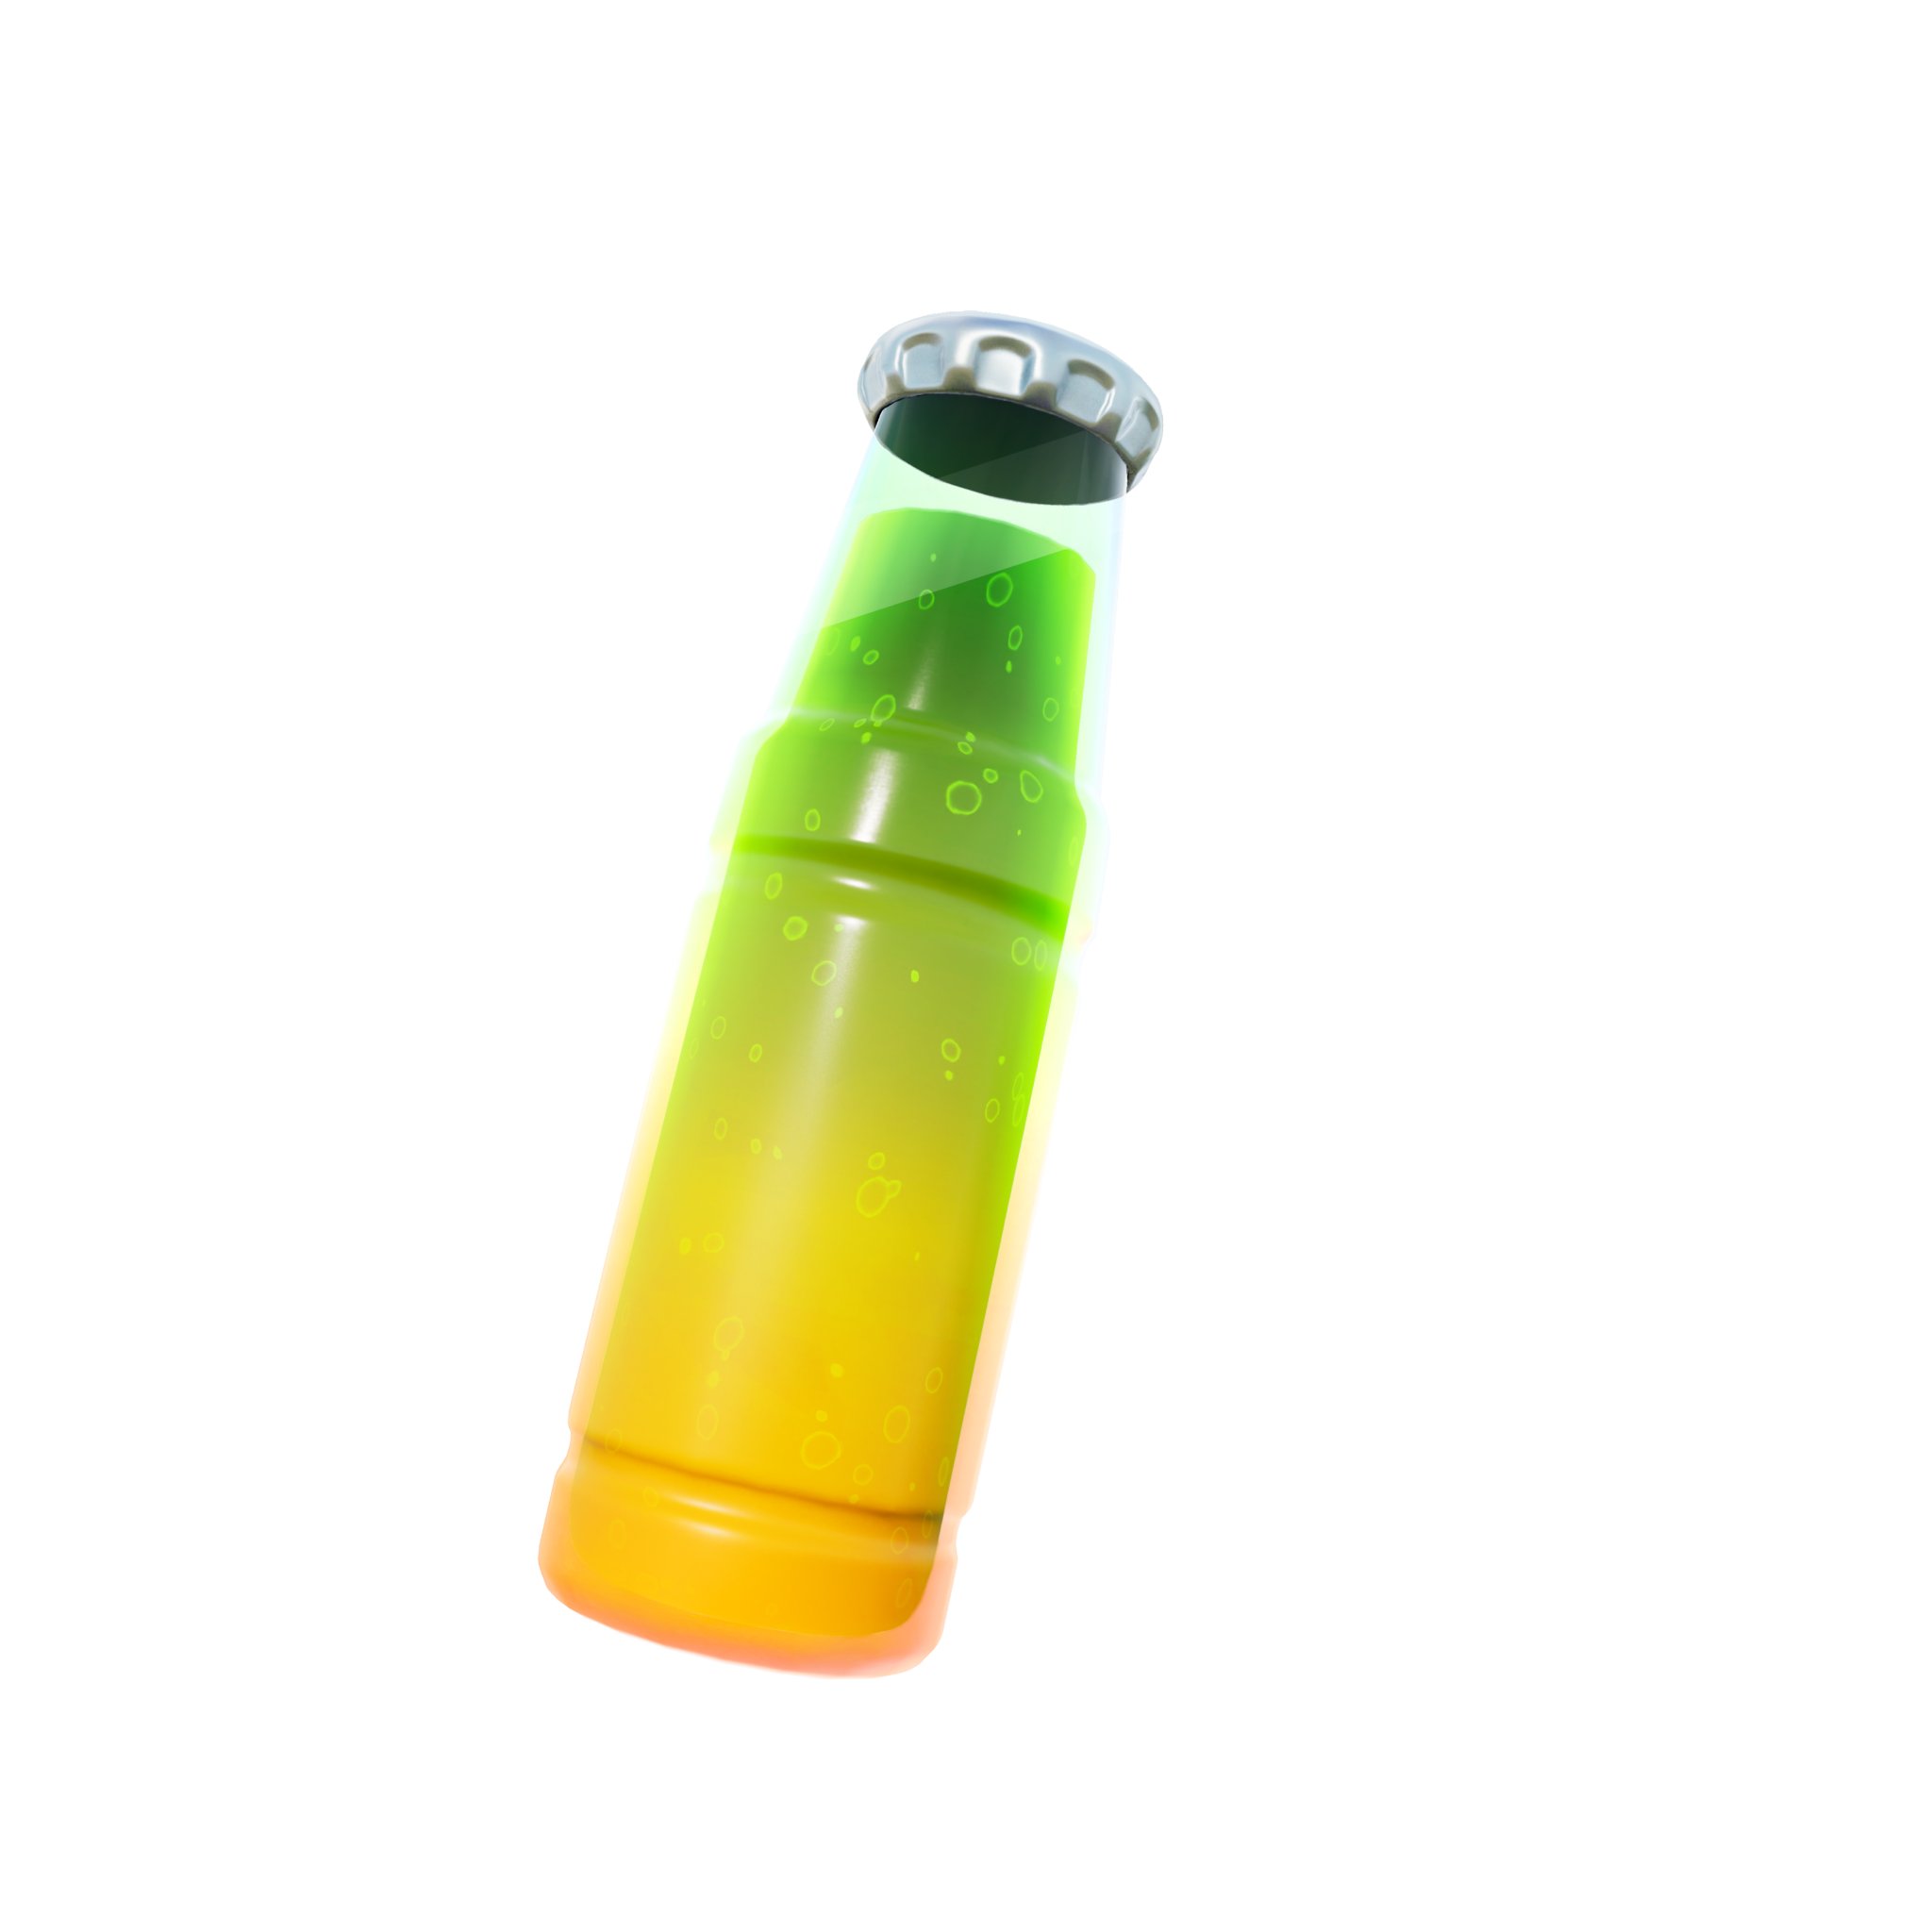 Epic Games - Fortnite - Metal Water Bottle W/Strap - Green